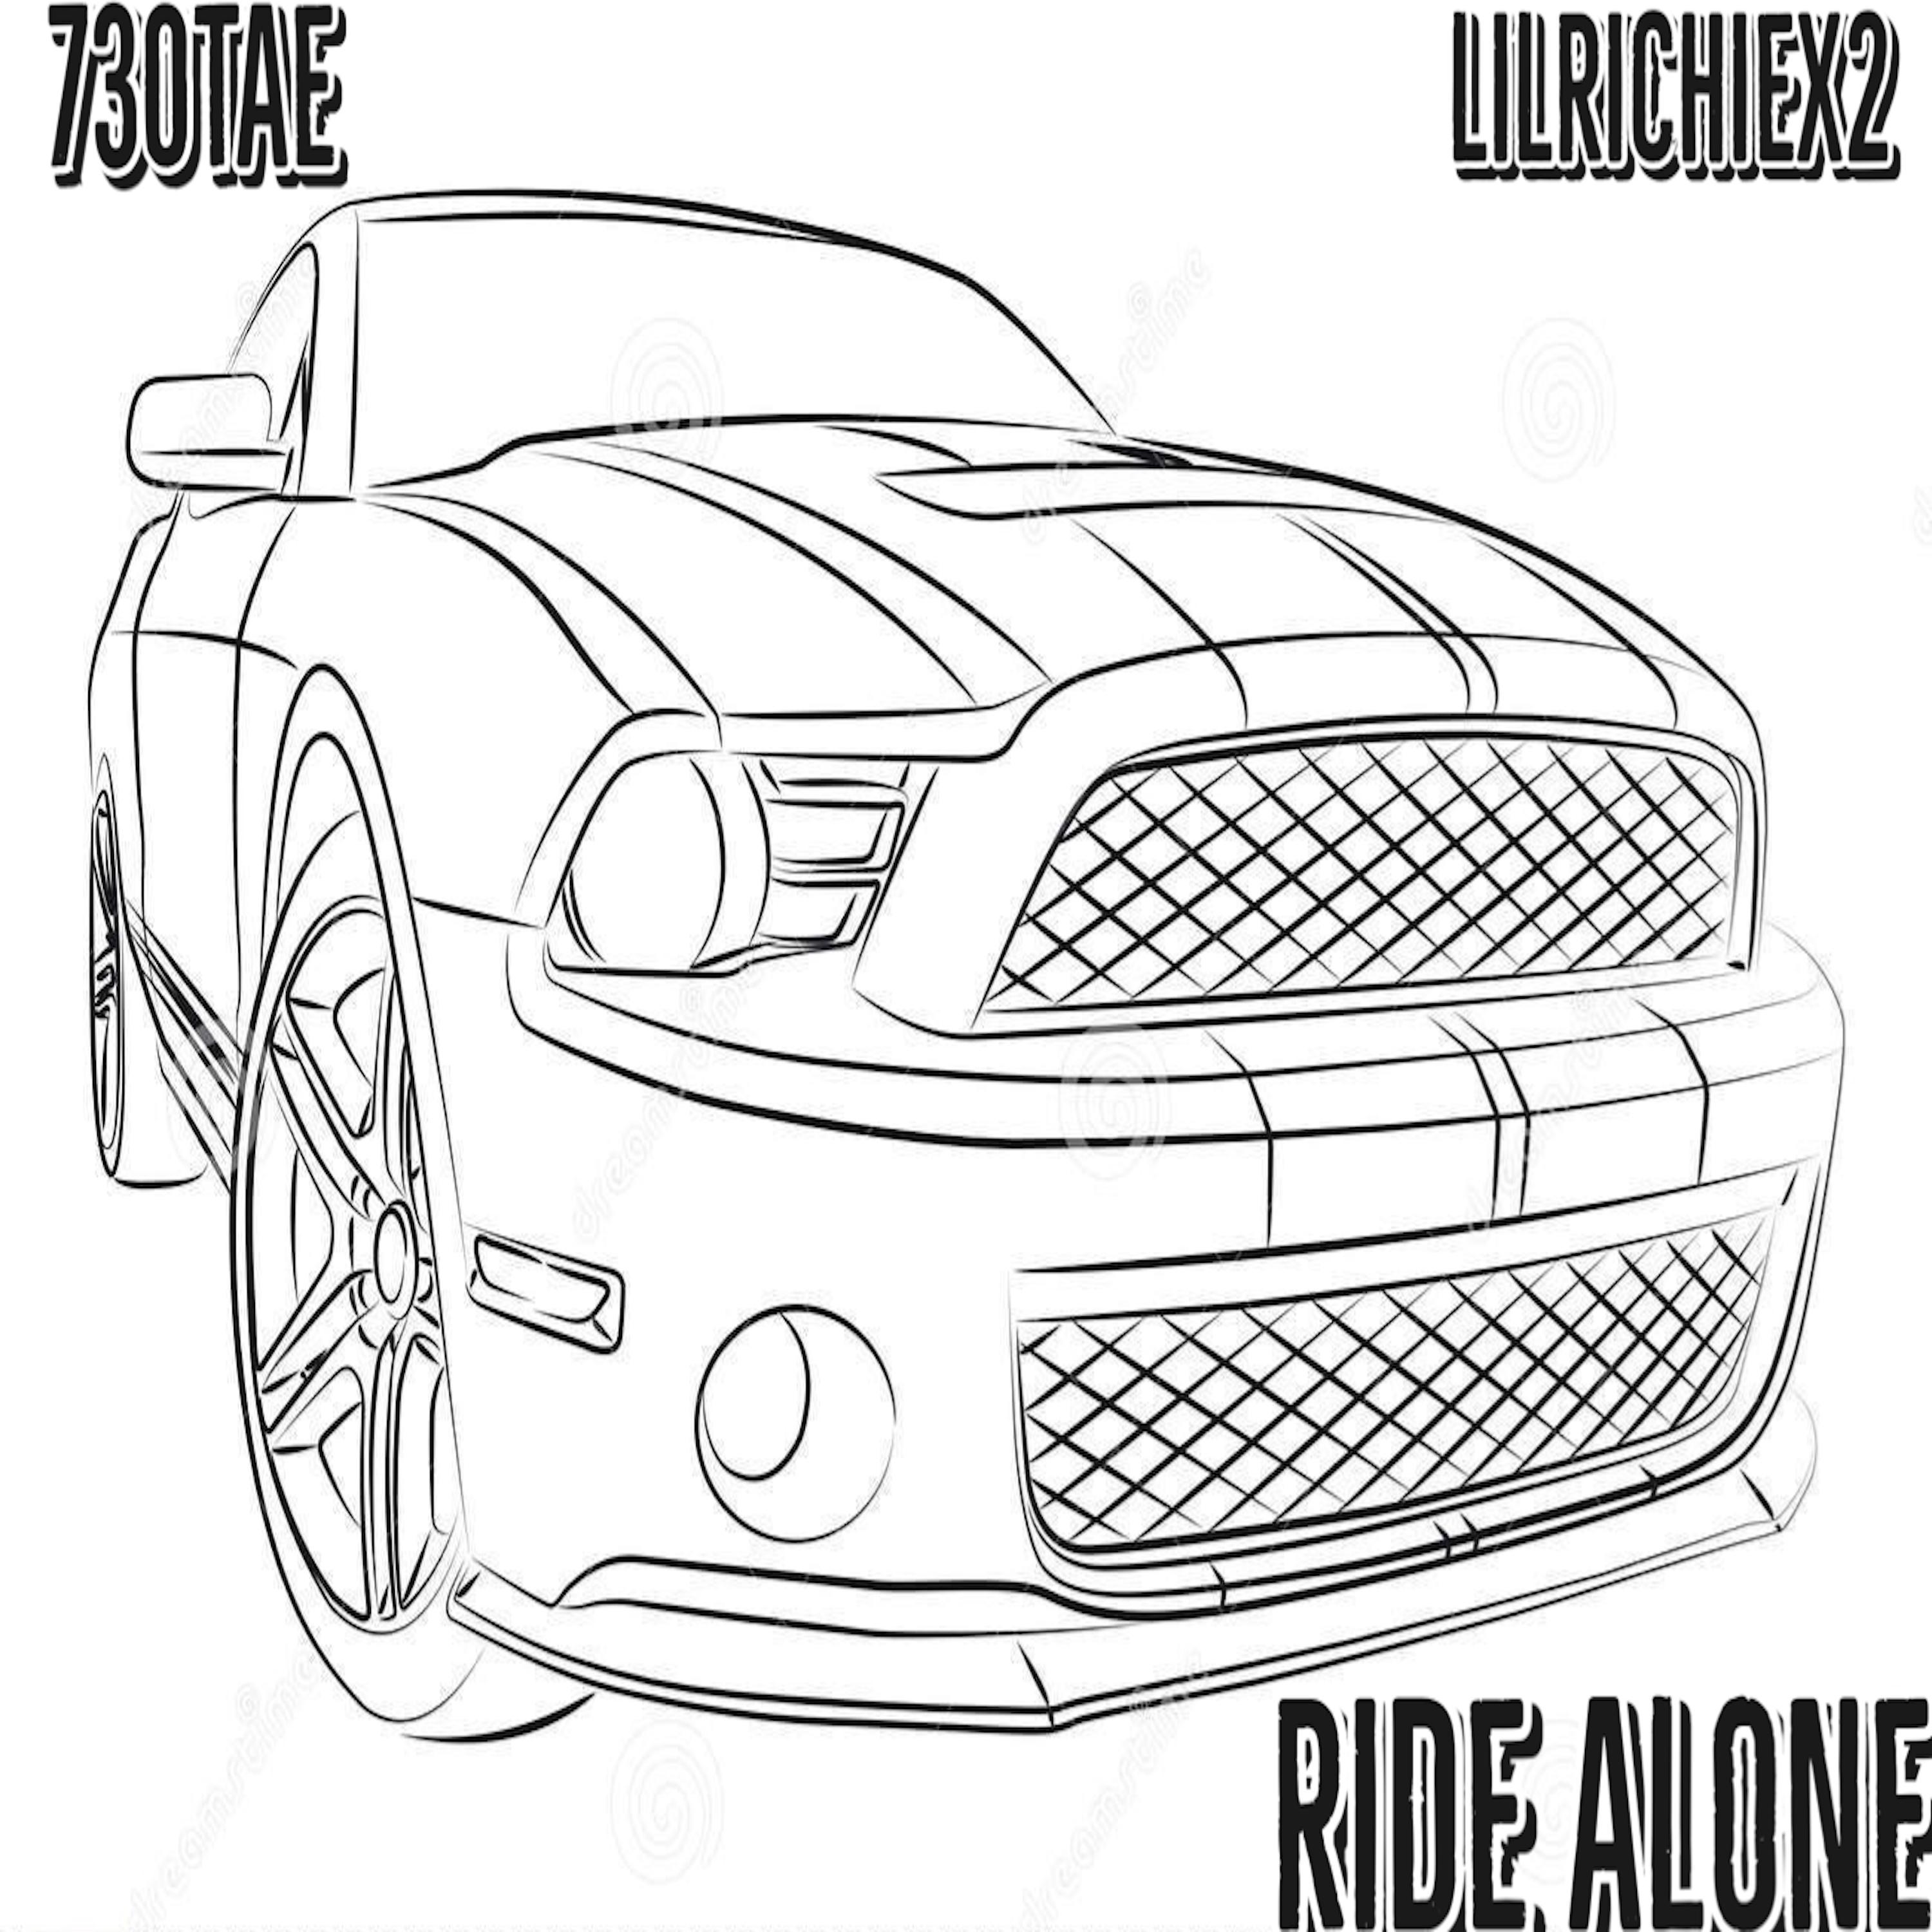 730tae - RIDE ALONE (feat. LilRichiex2)